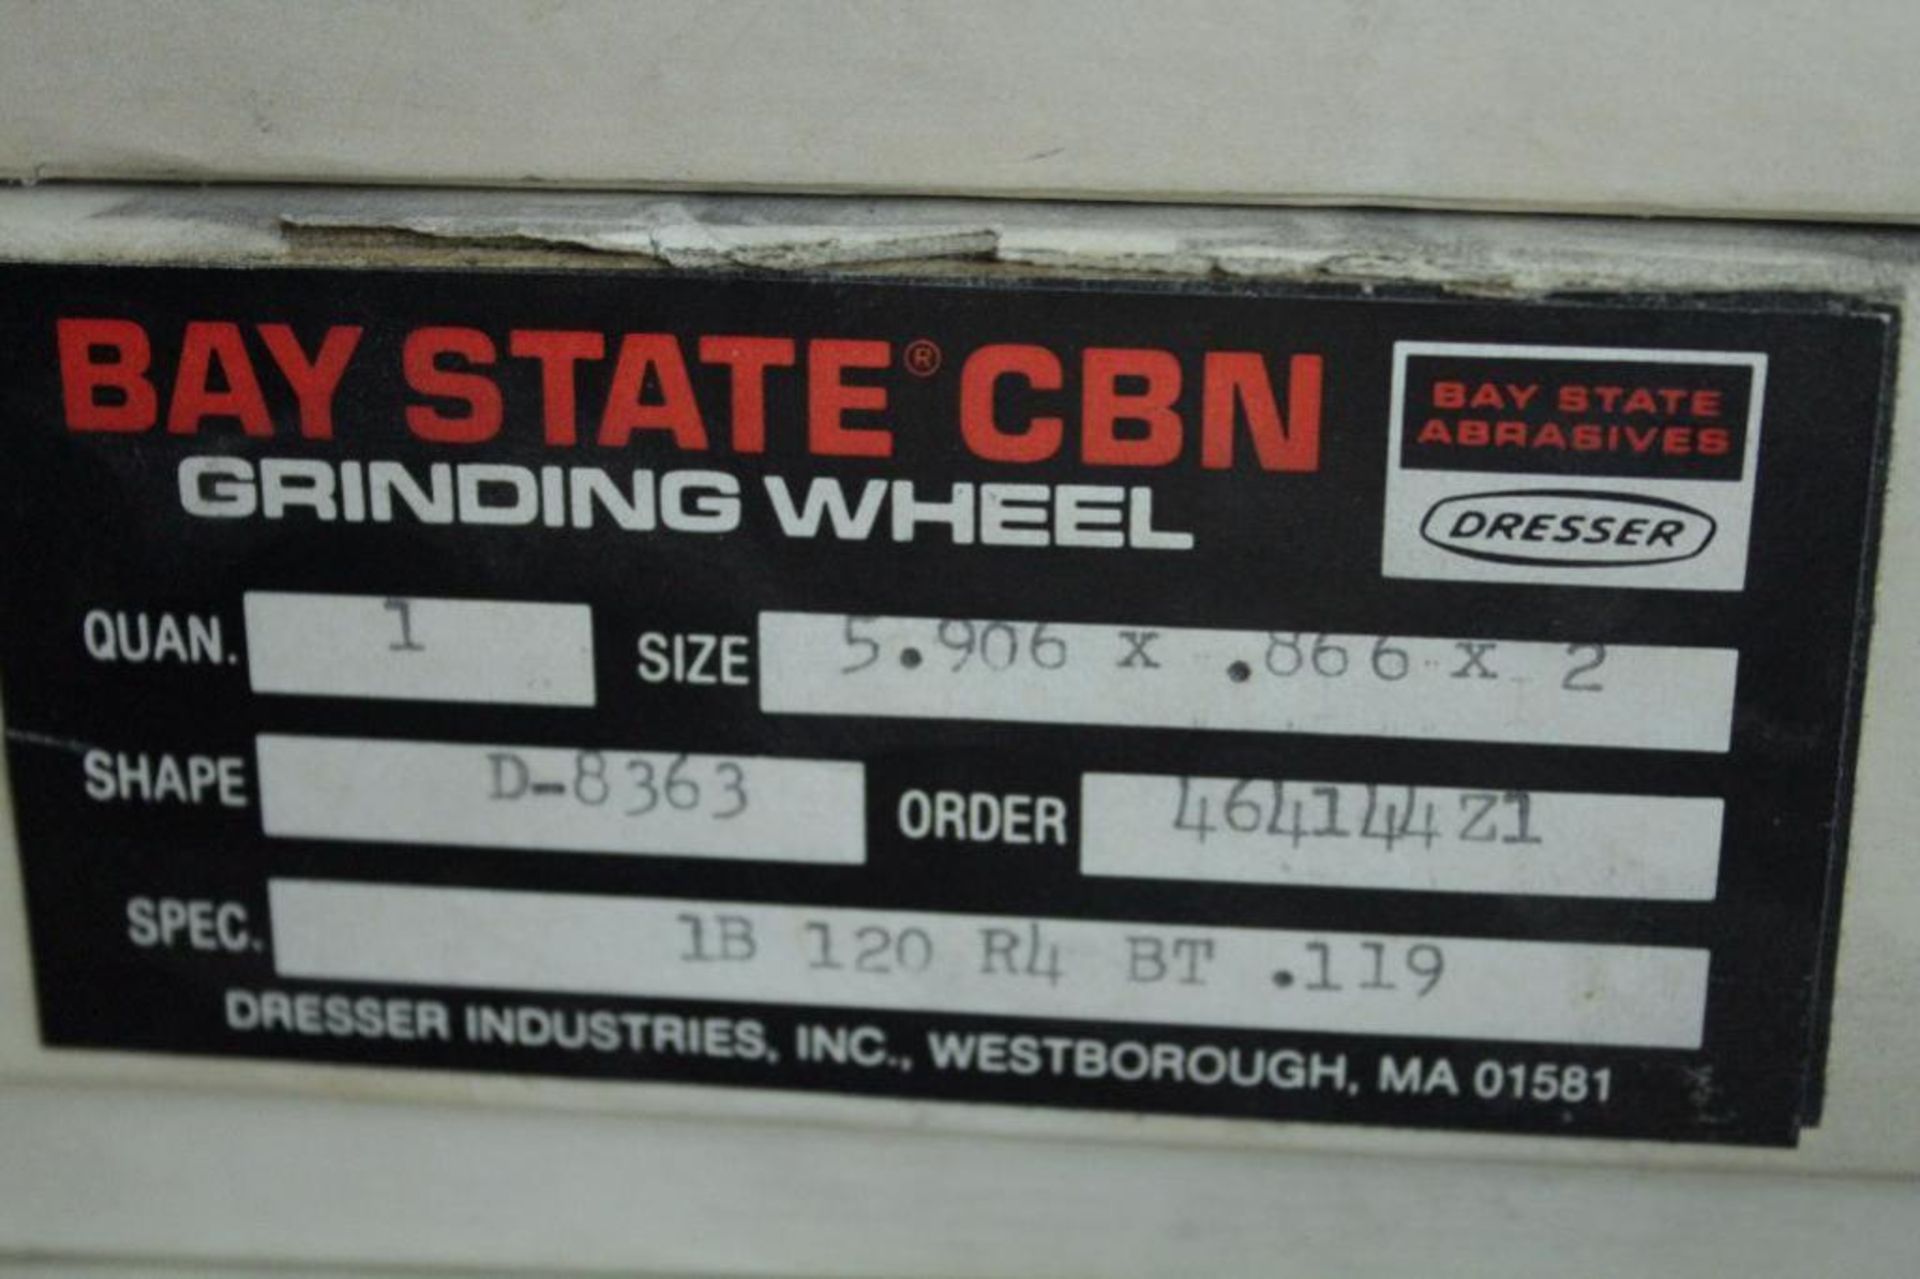 Bay State CBN diamond grinding wheels - Image 4 of 5